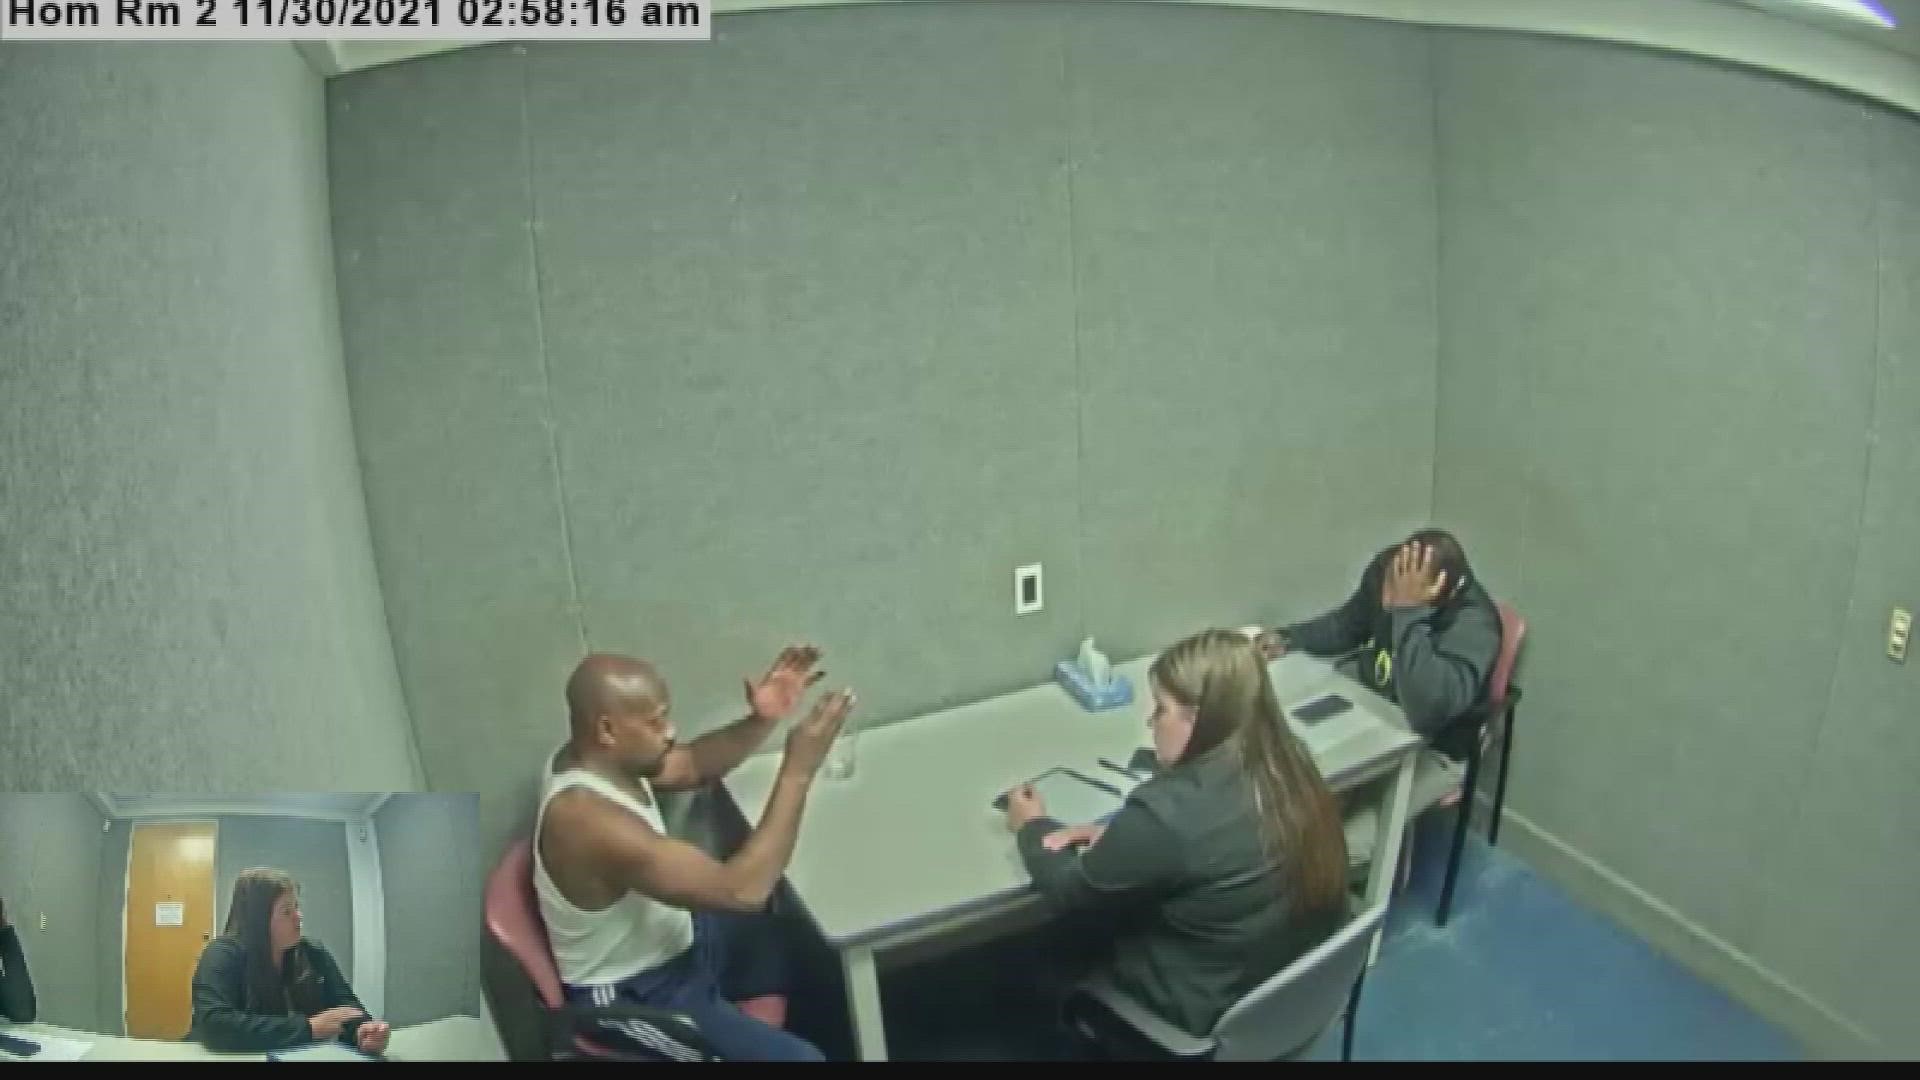 Police interrogation video released in the murder case against Otis Anderson Sr.